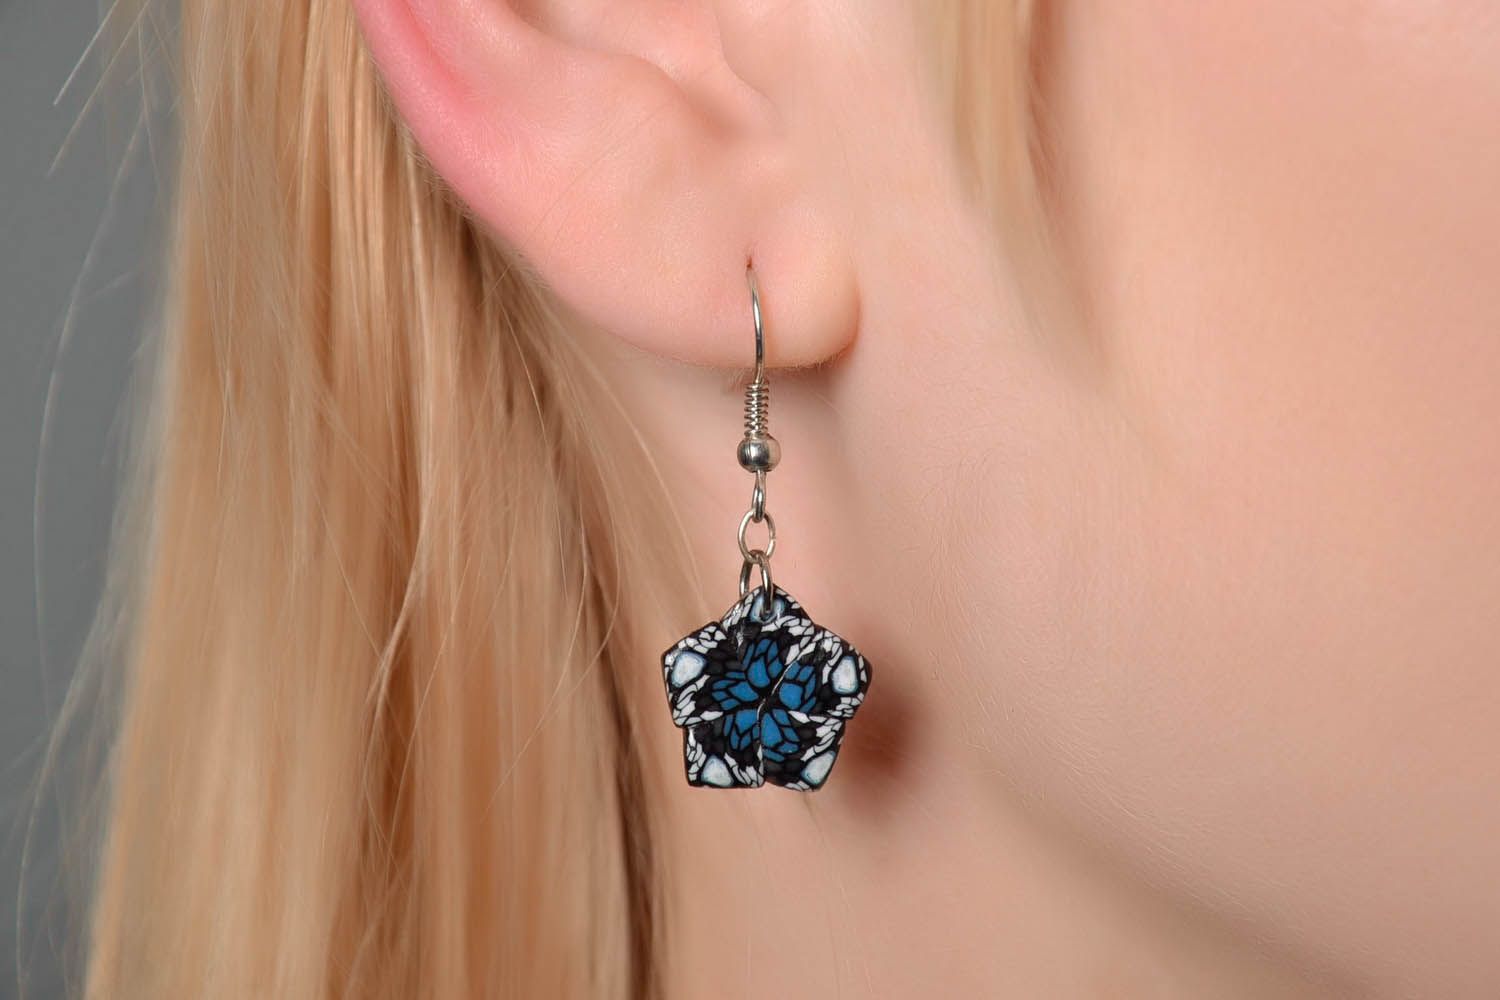 Plastic earrings photo 3